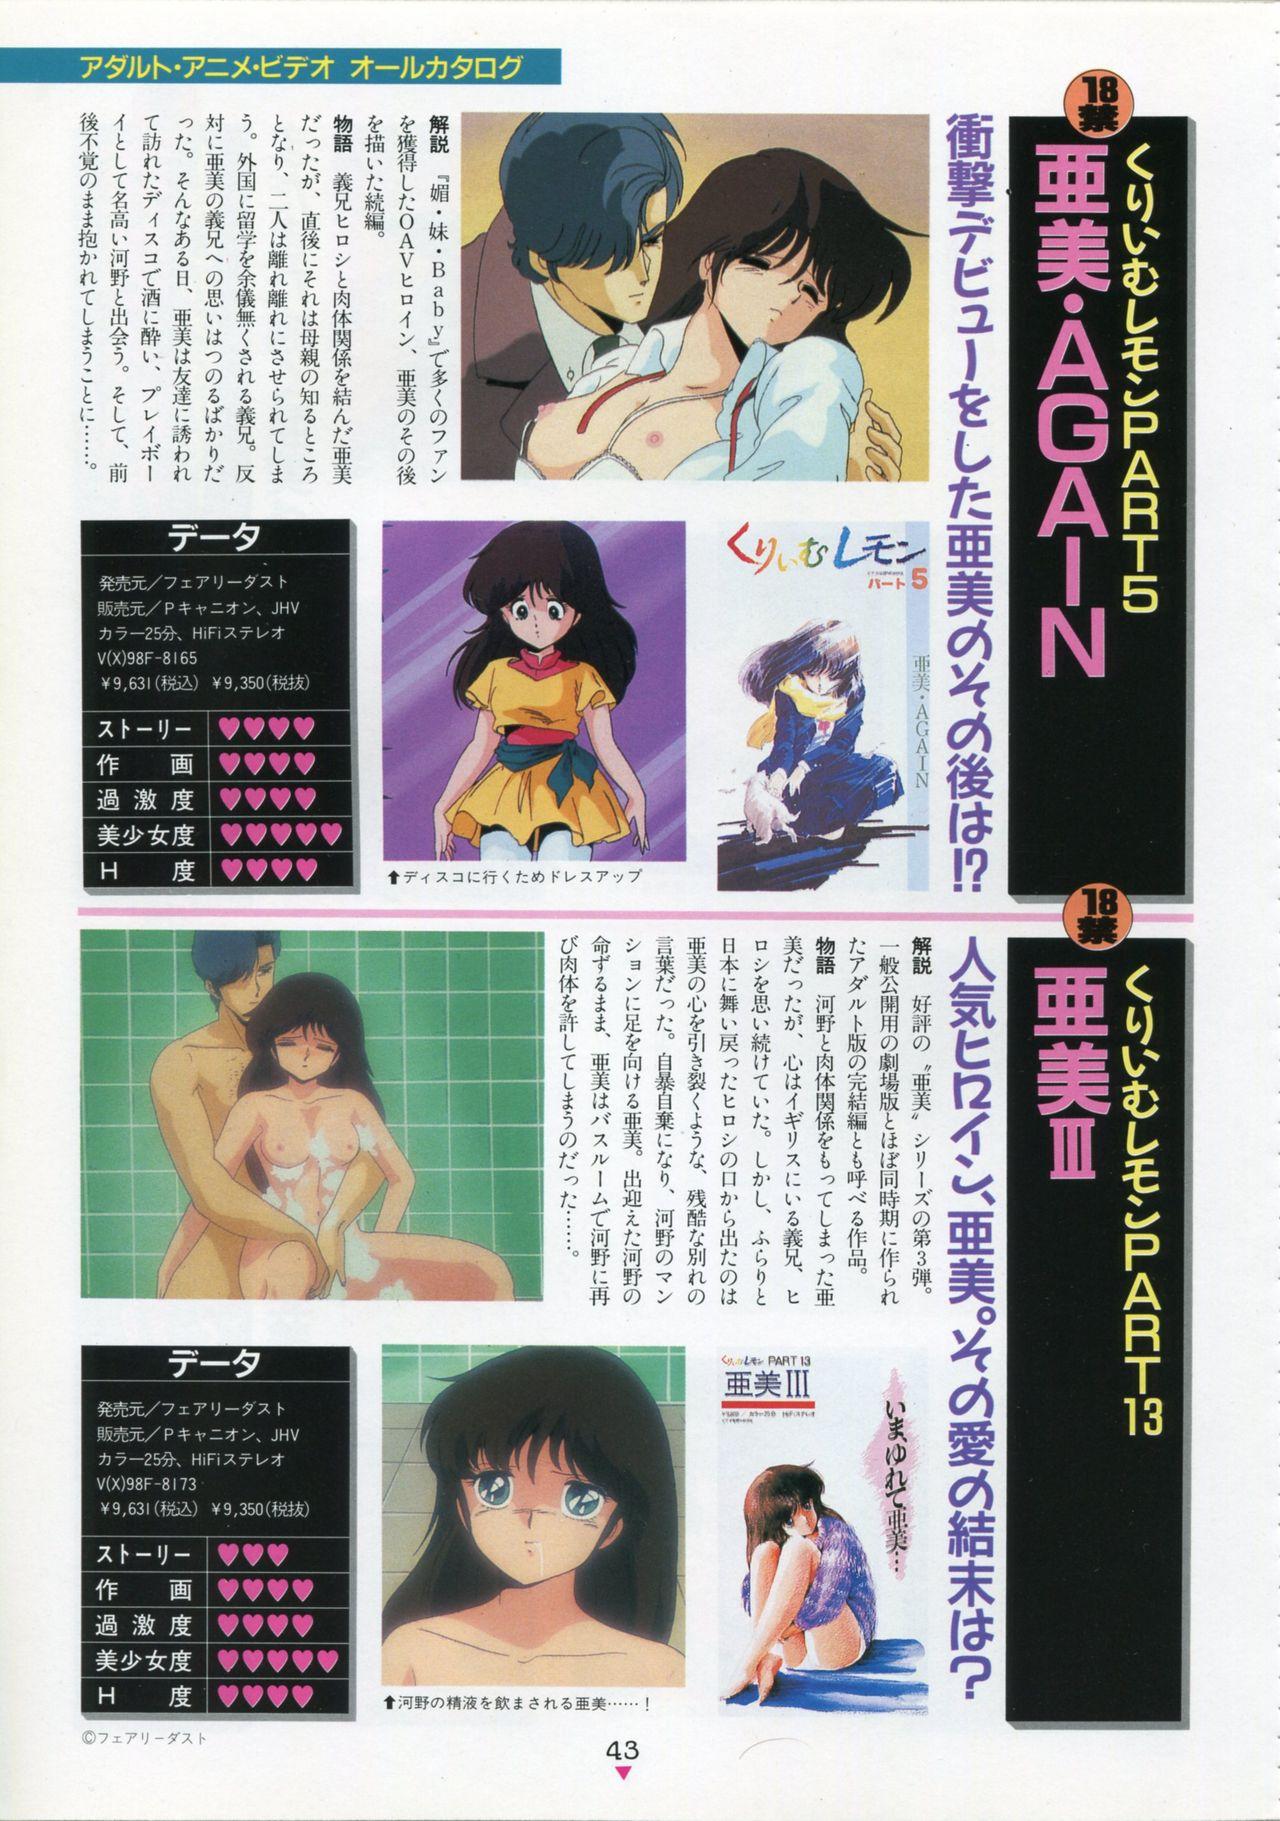 Bishoujo Anime Daizenshuu - Adult Animation Video Catalog 1991 38